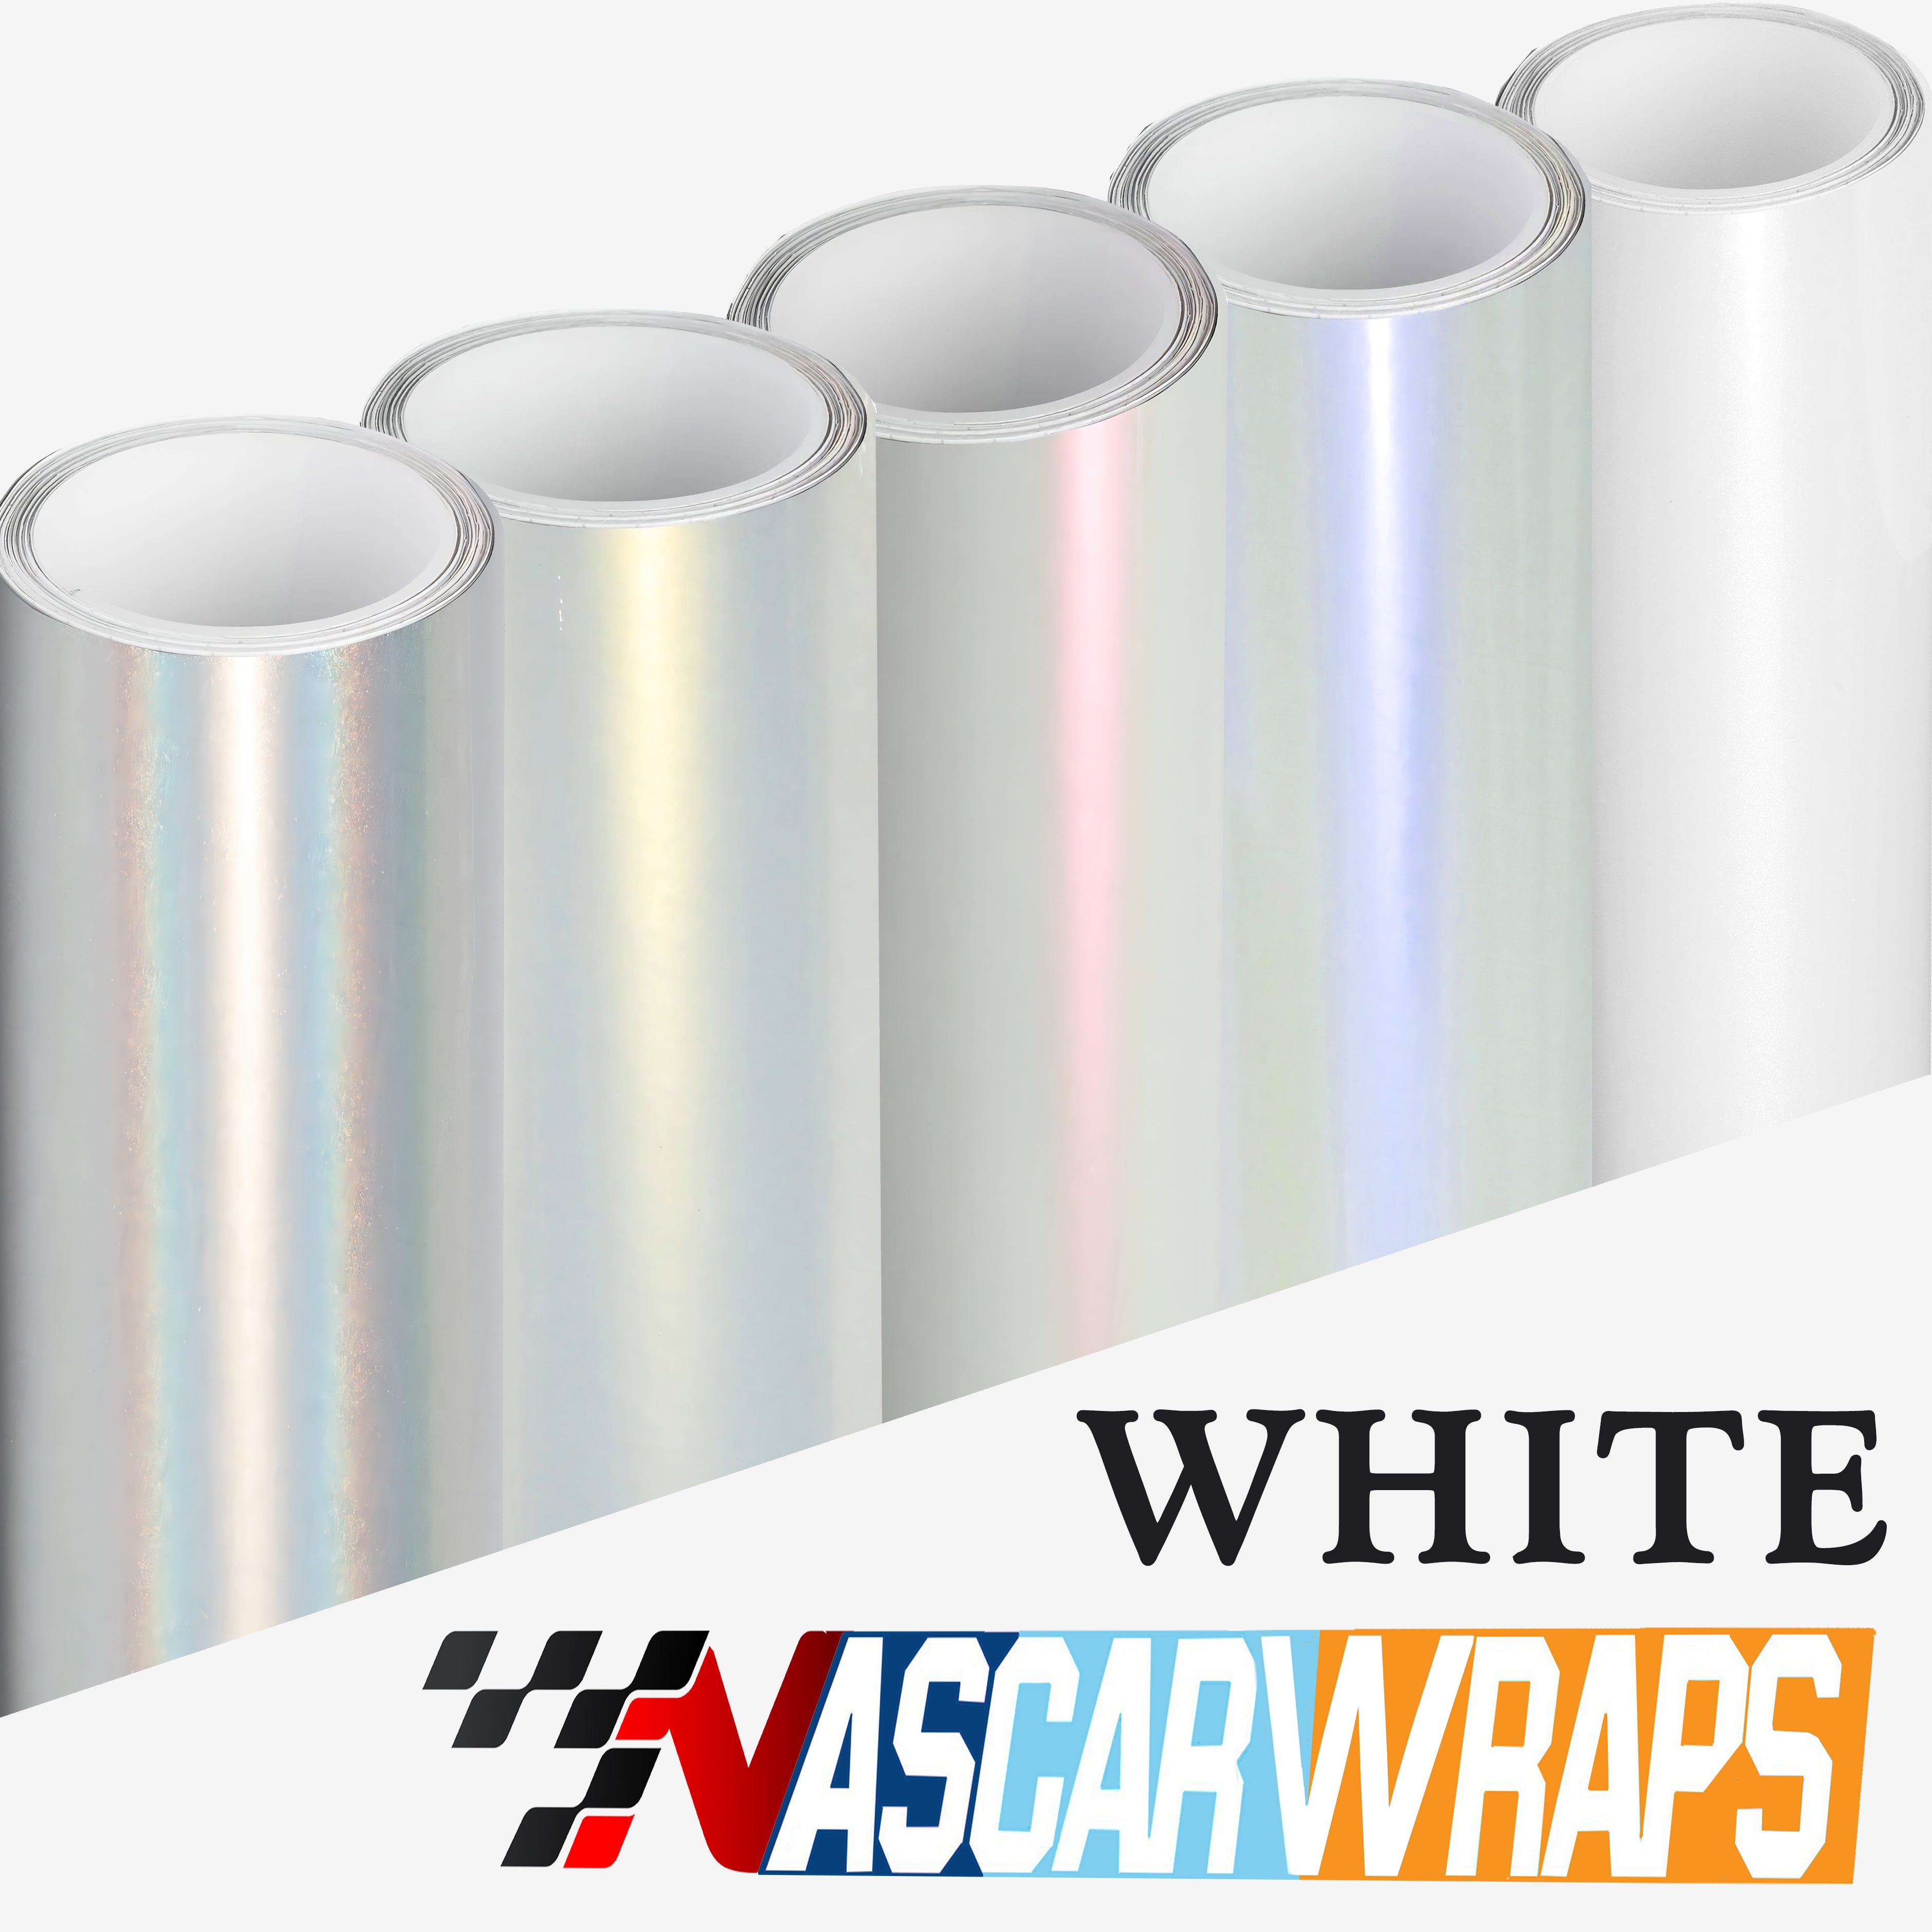 Nascarwraps Car Wrap - High Gloss Metallic Ocean Blue Vinyl Wrap For Sale